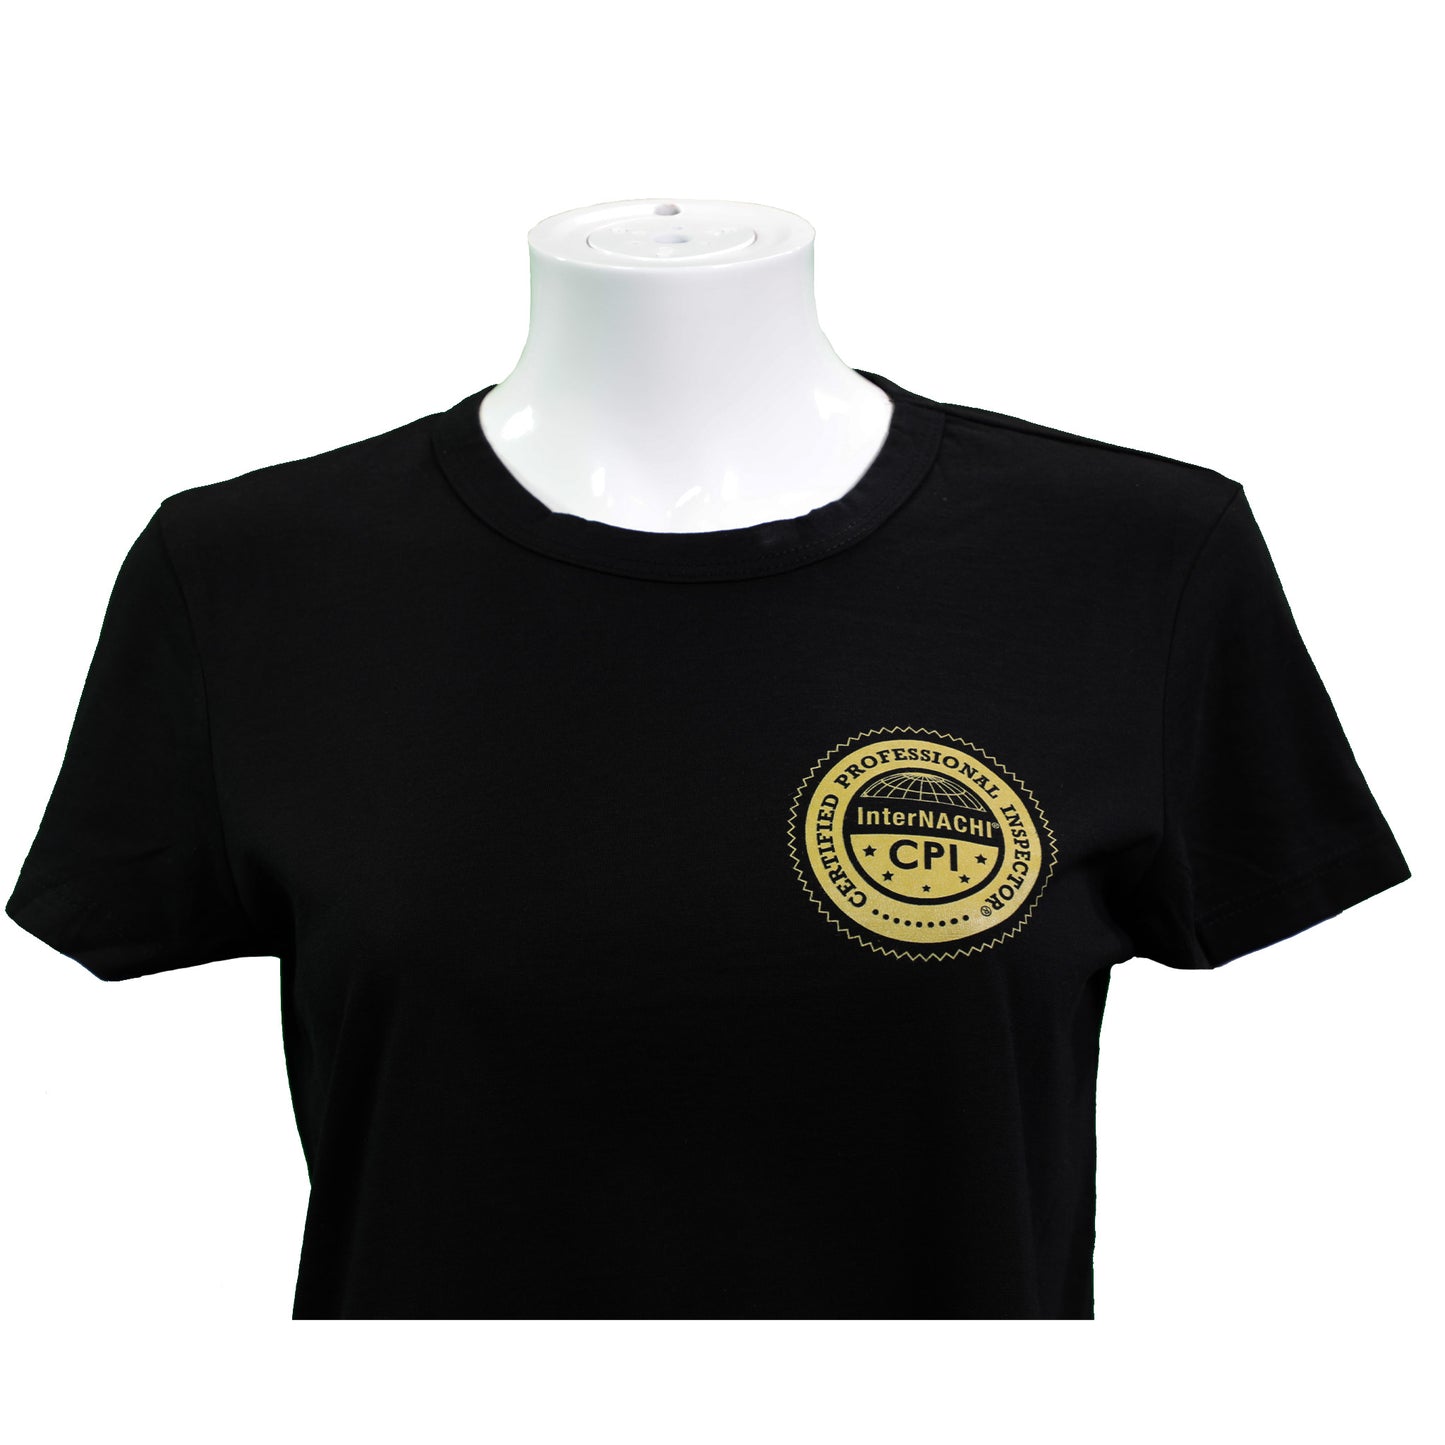 Women's Certified Professional Inspector (CPI)® T-Shirt